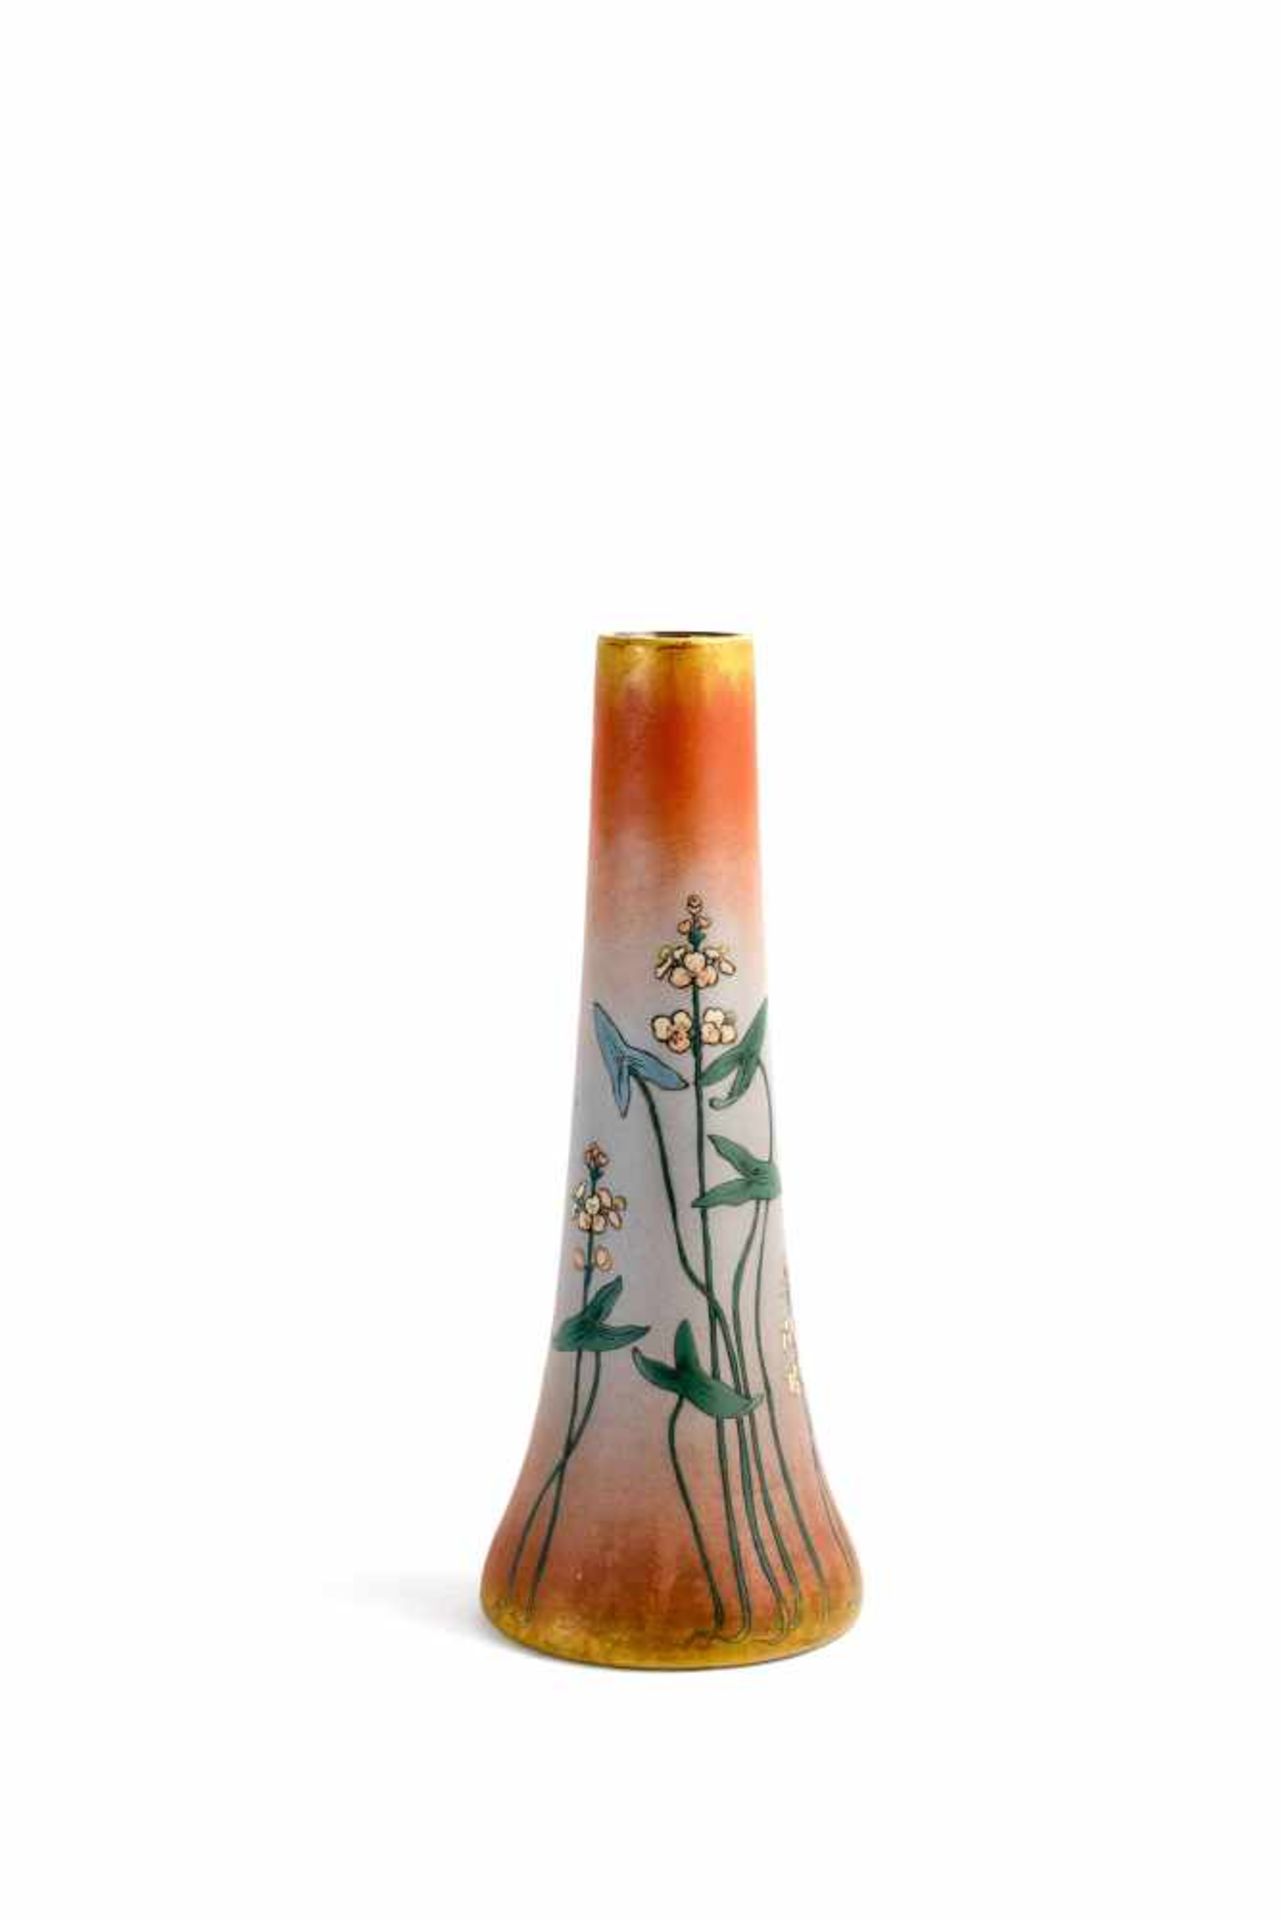 Keramikvase Villeroy & Boch, Mettlach, 1898, eingeritzer Blumendekor, Keramik, Chromolith, Höhe 34,2